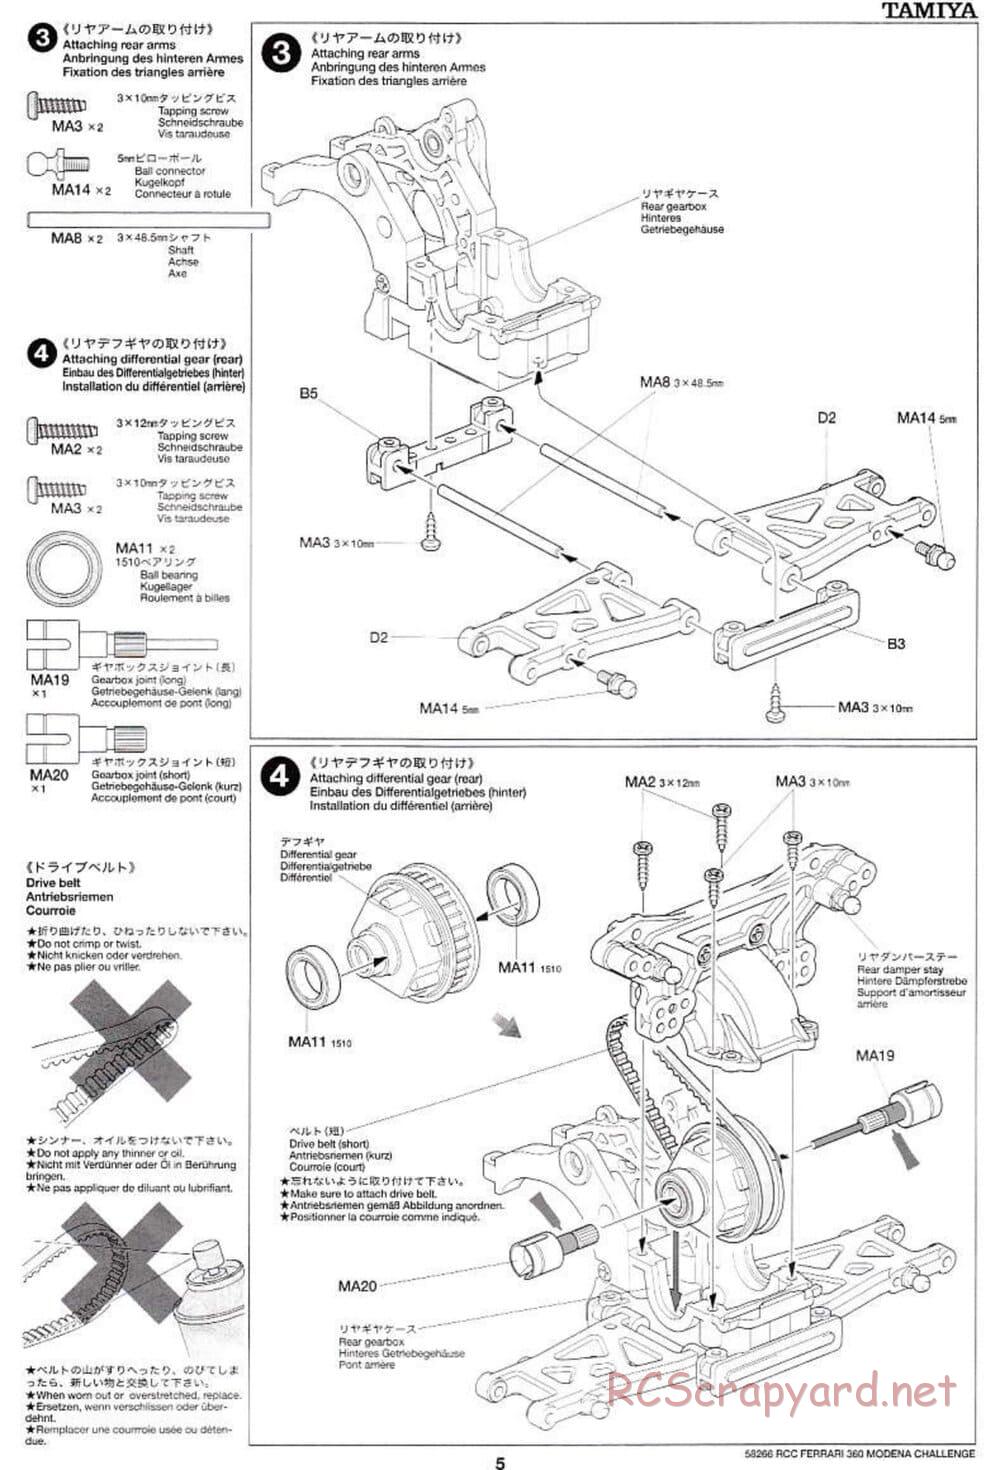 Tamiya - Ferrari 360 Modena Challenge - TA-04 Chassis - Manual - Page 5